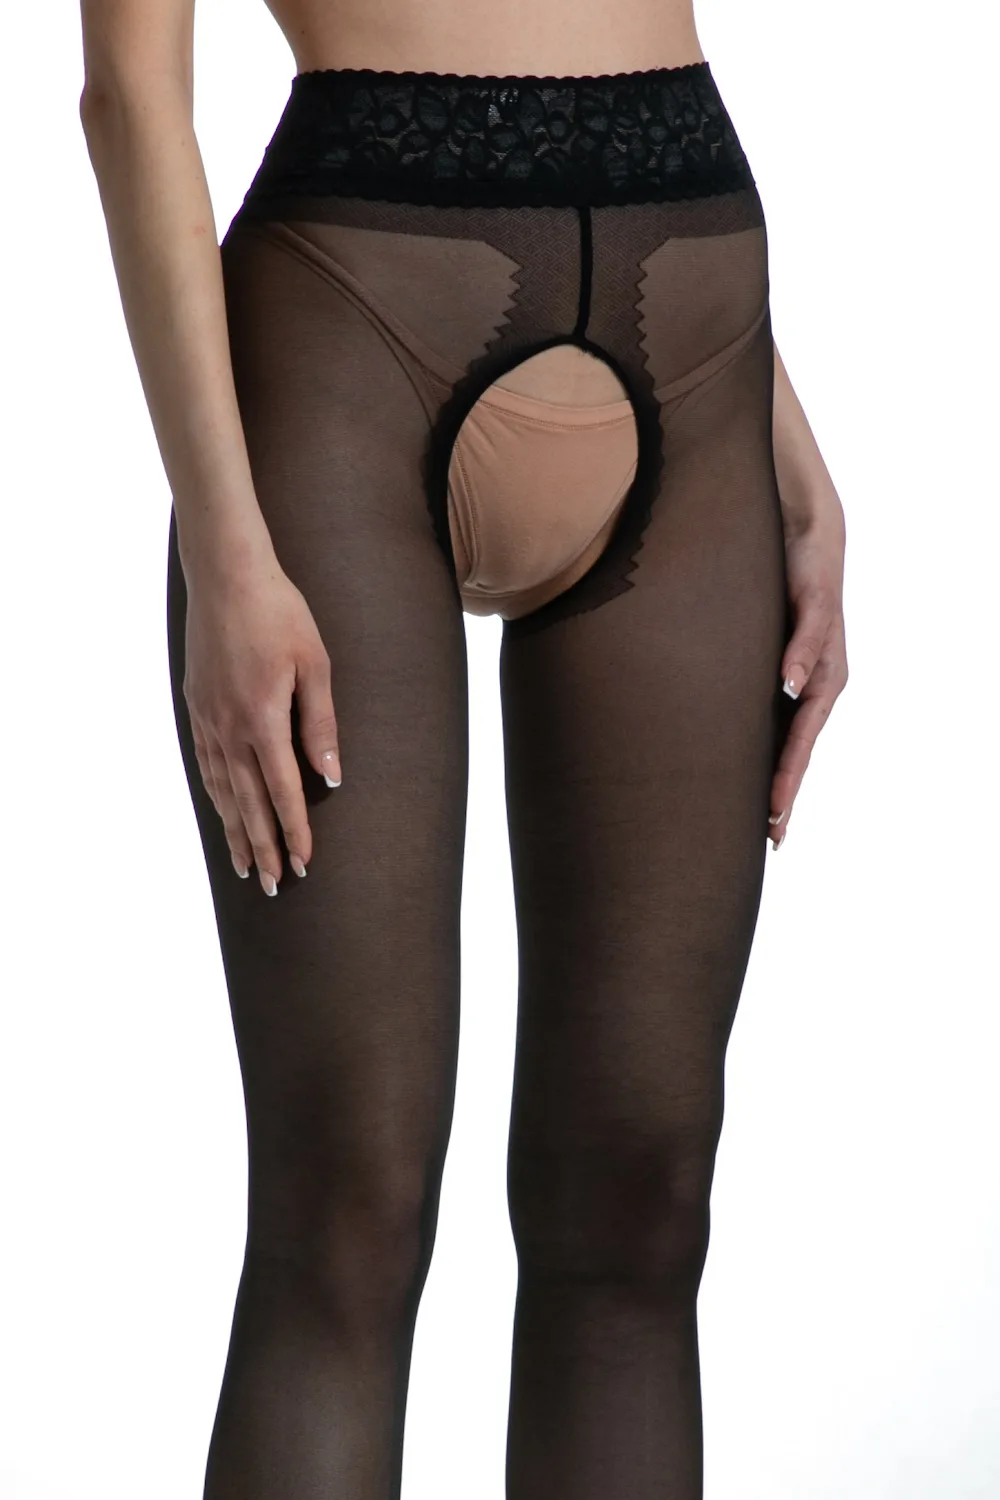 Foto zwarte open kruis panty hip lace